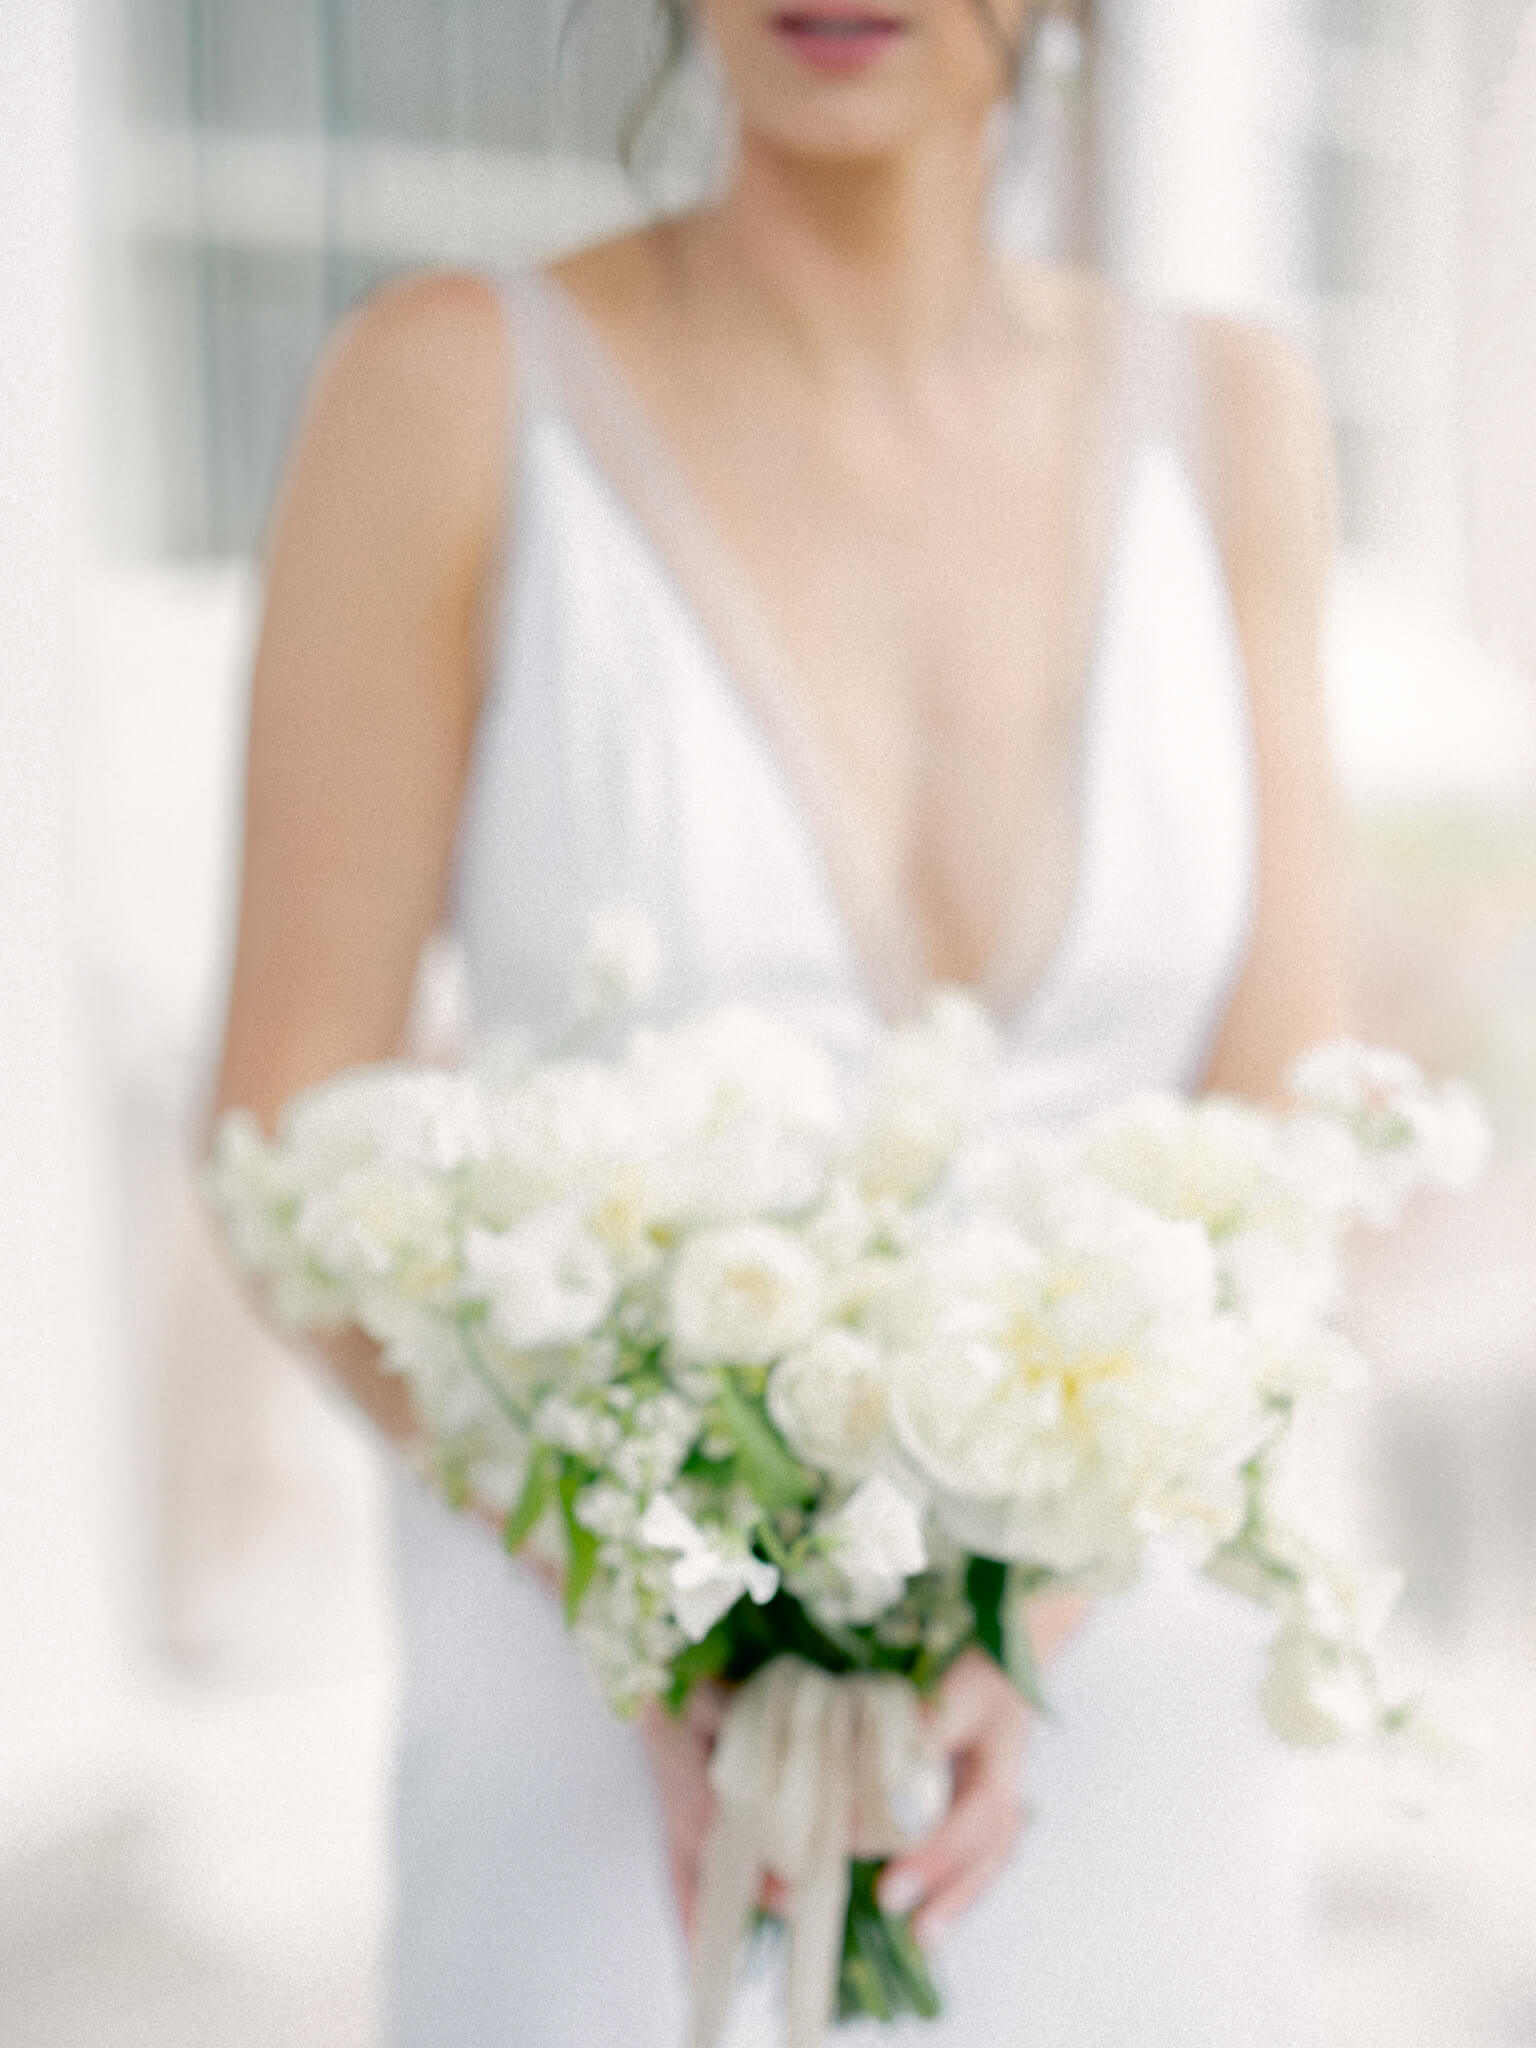 Closeup of a bride holding a white bouquet